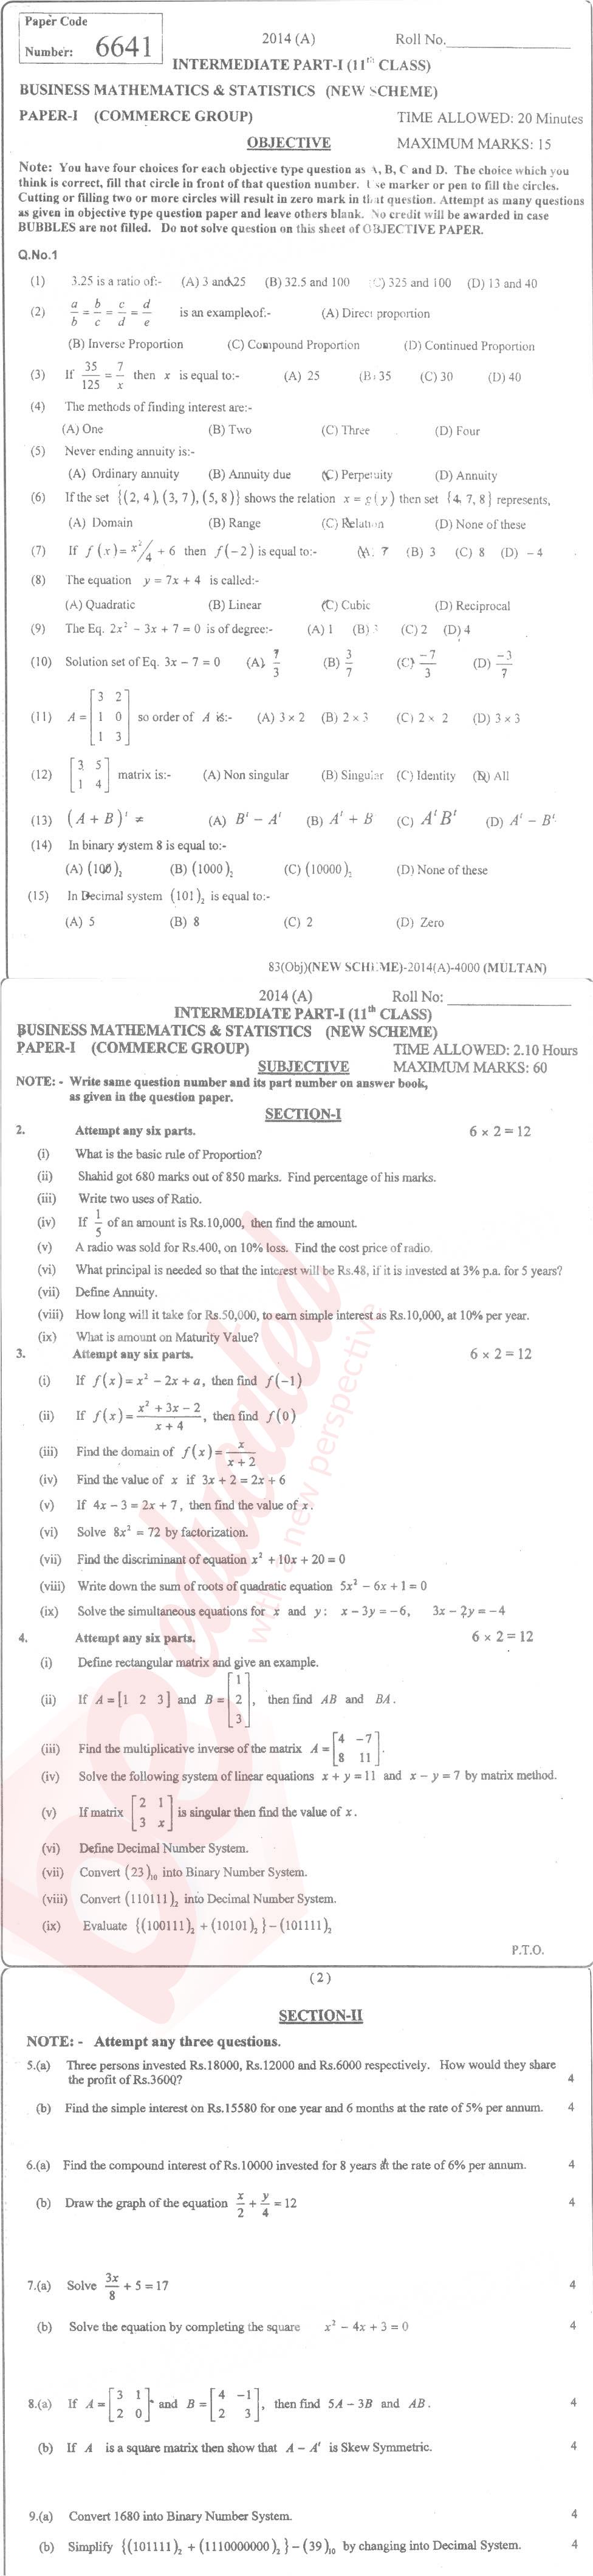 Business Mathematics ICOM Part 1 Past Paper Group 1 BISE Multan 2014